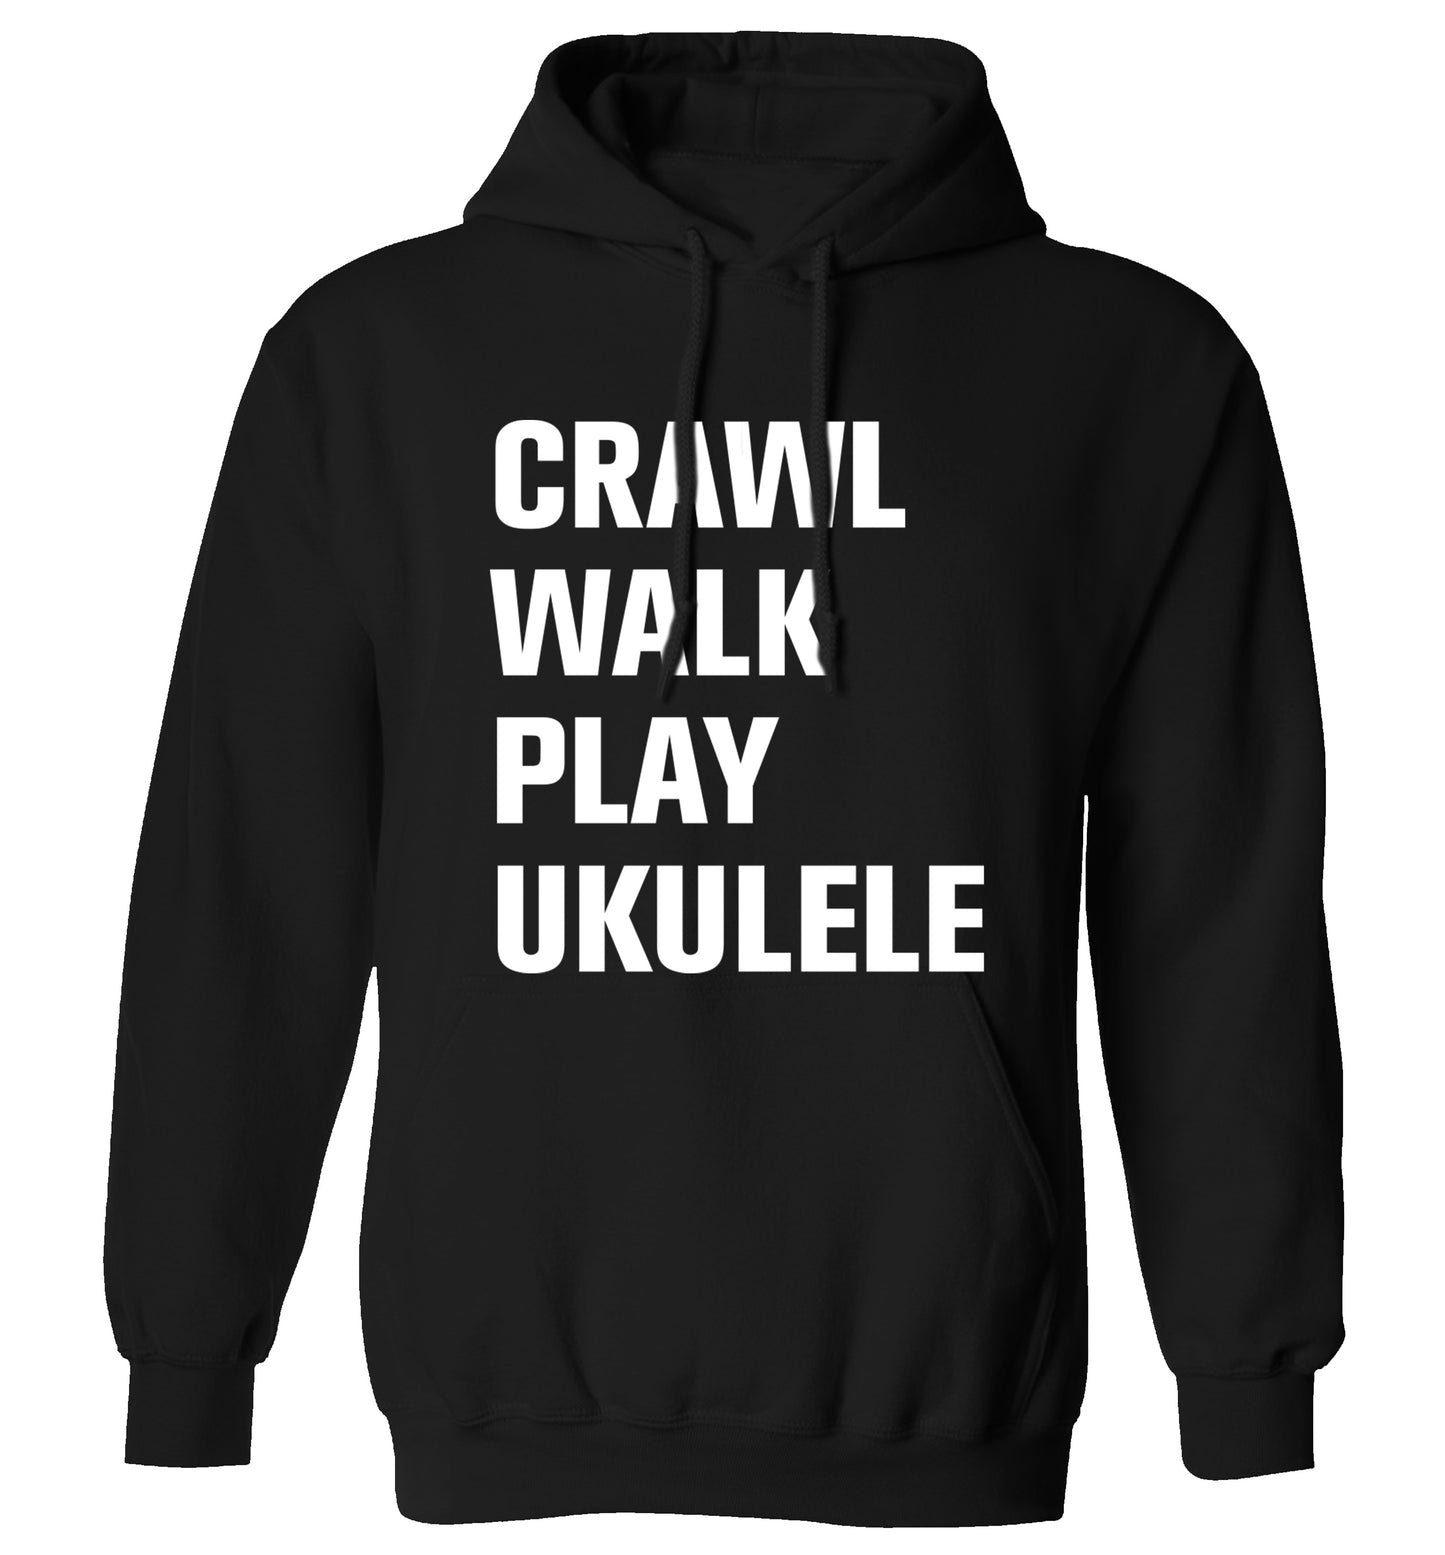 Crawl walk play ukulele adults unisex black hoodie 2XL